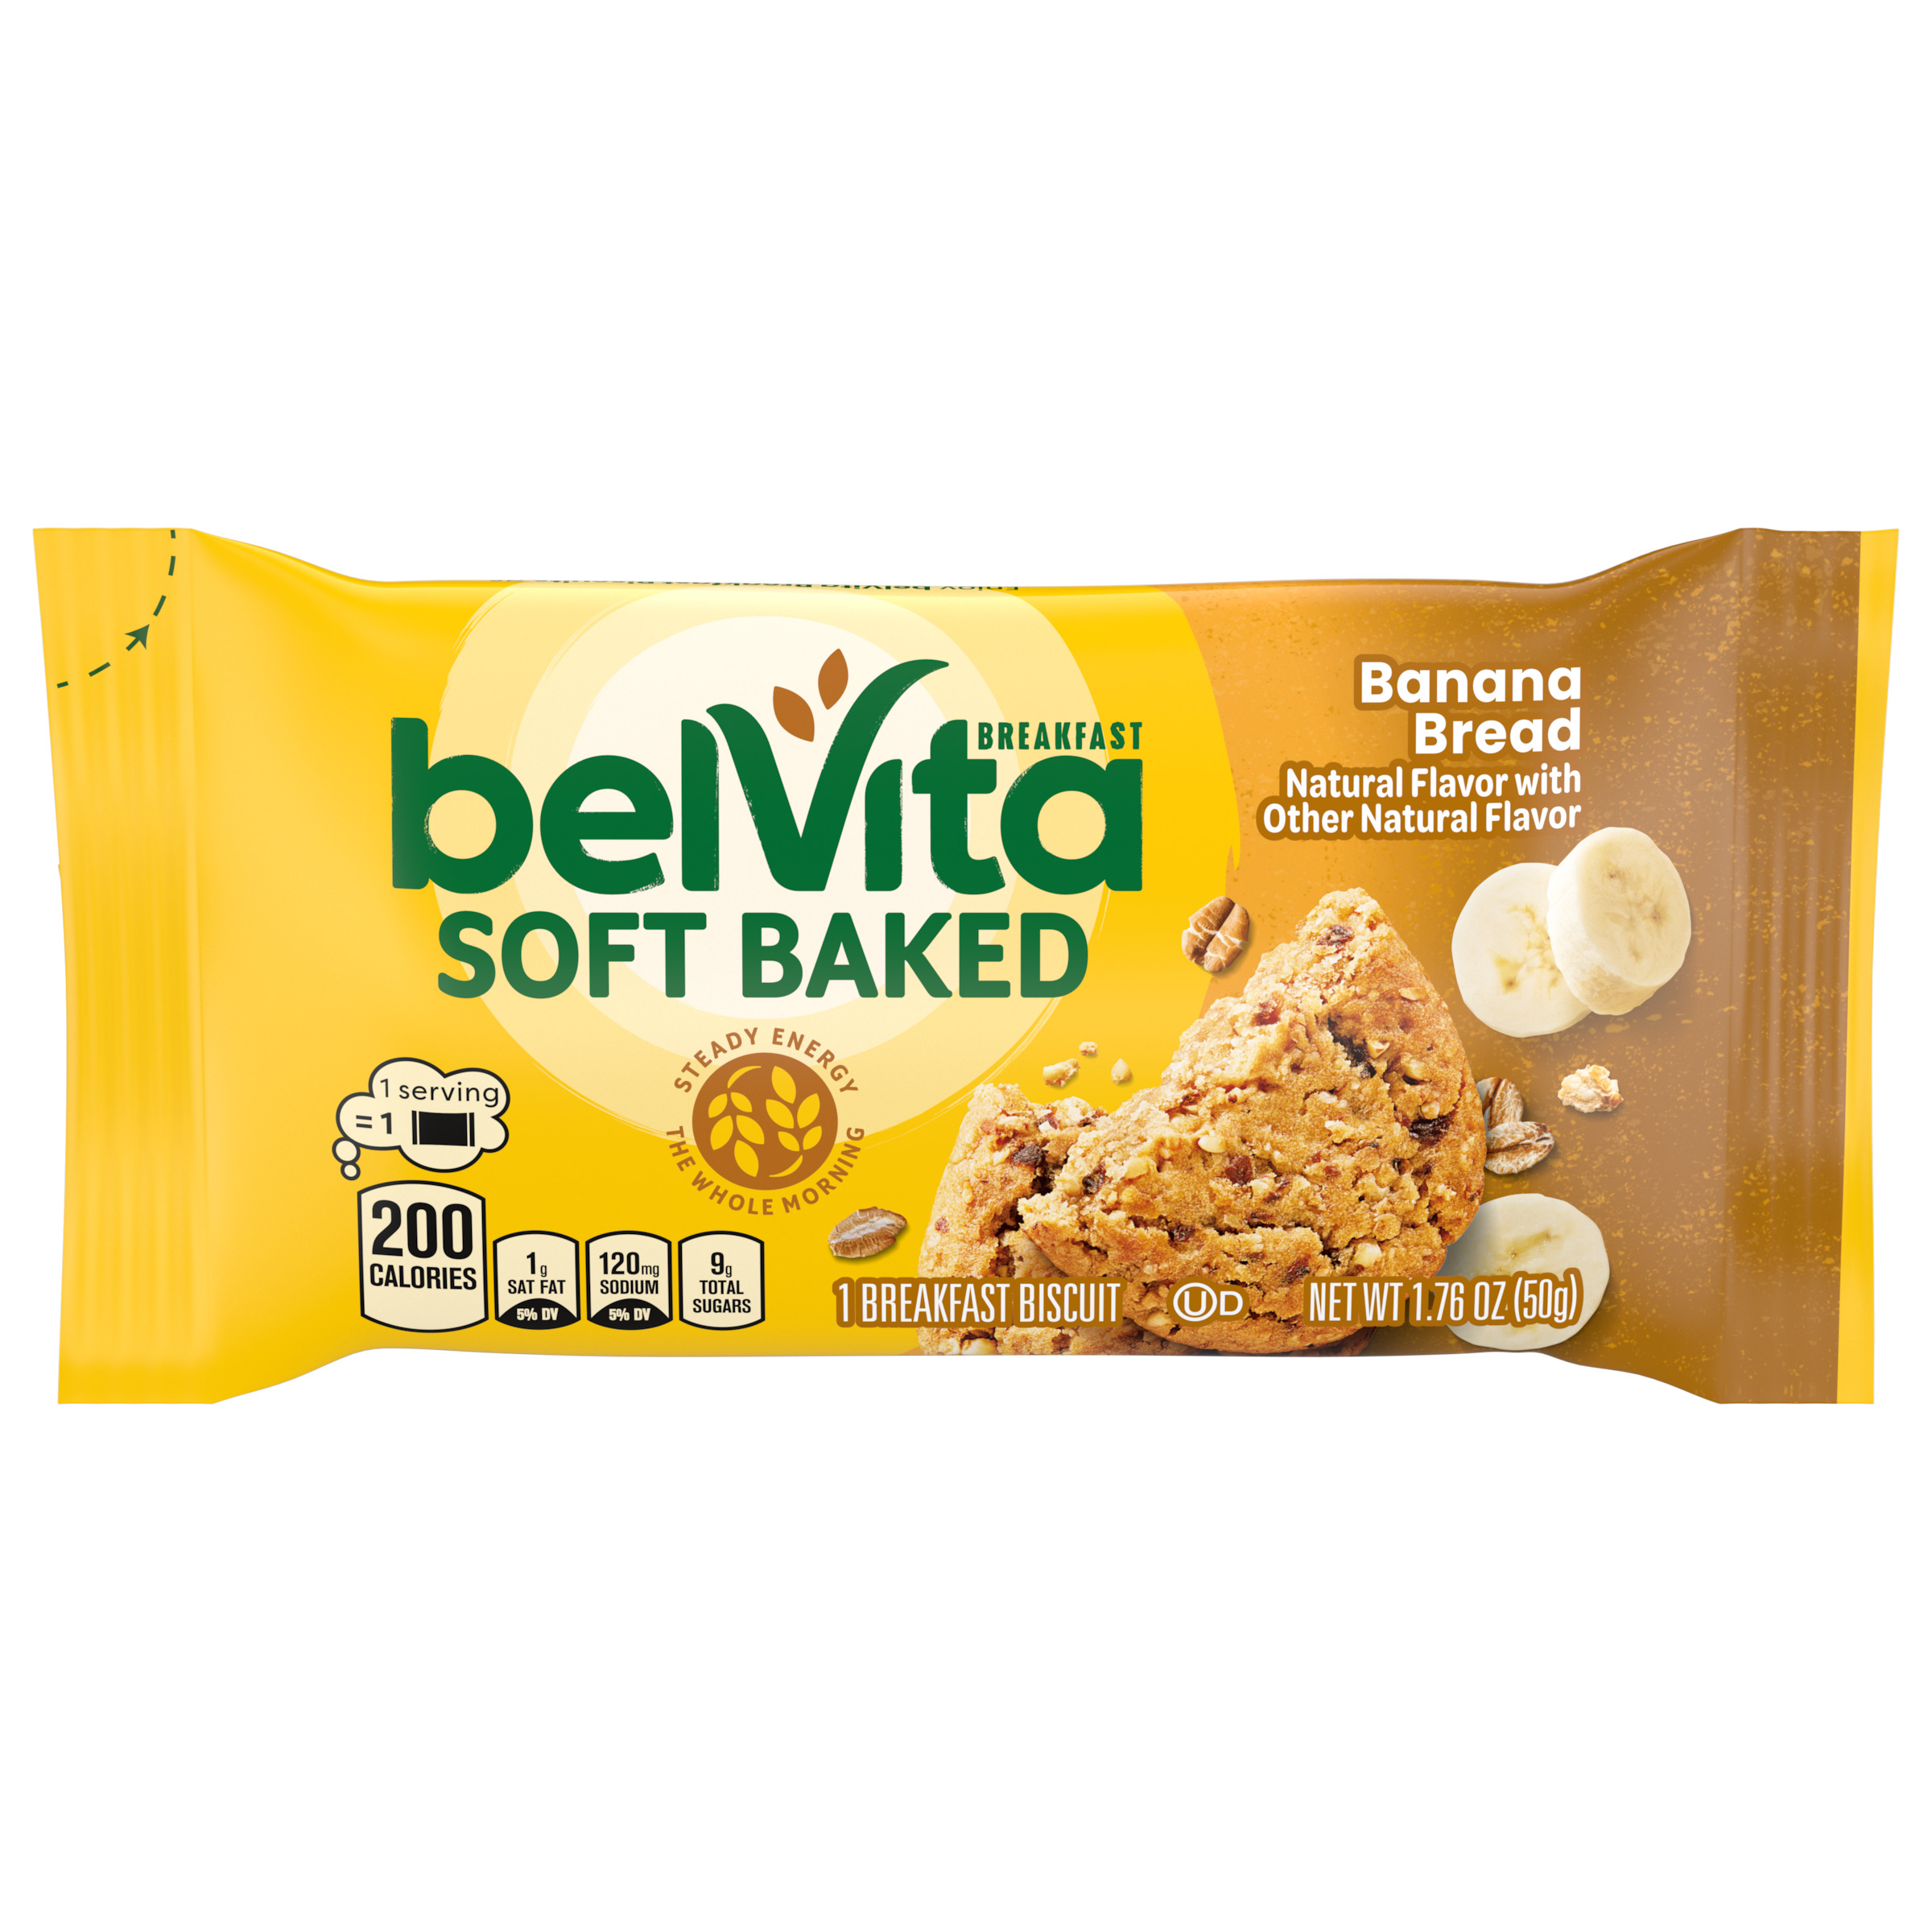 belVita Soft Baked Banana Bread Breakfast Biscuits, 1 Pack (1 Biscuit Per Pack)